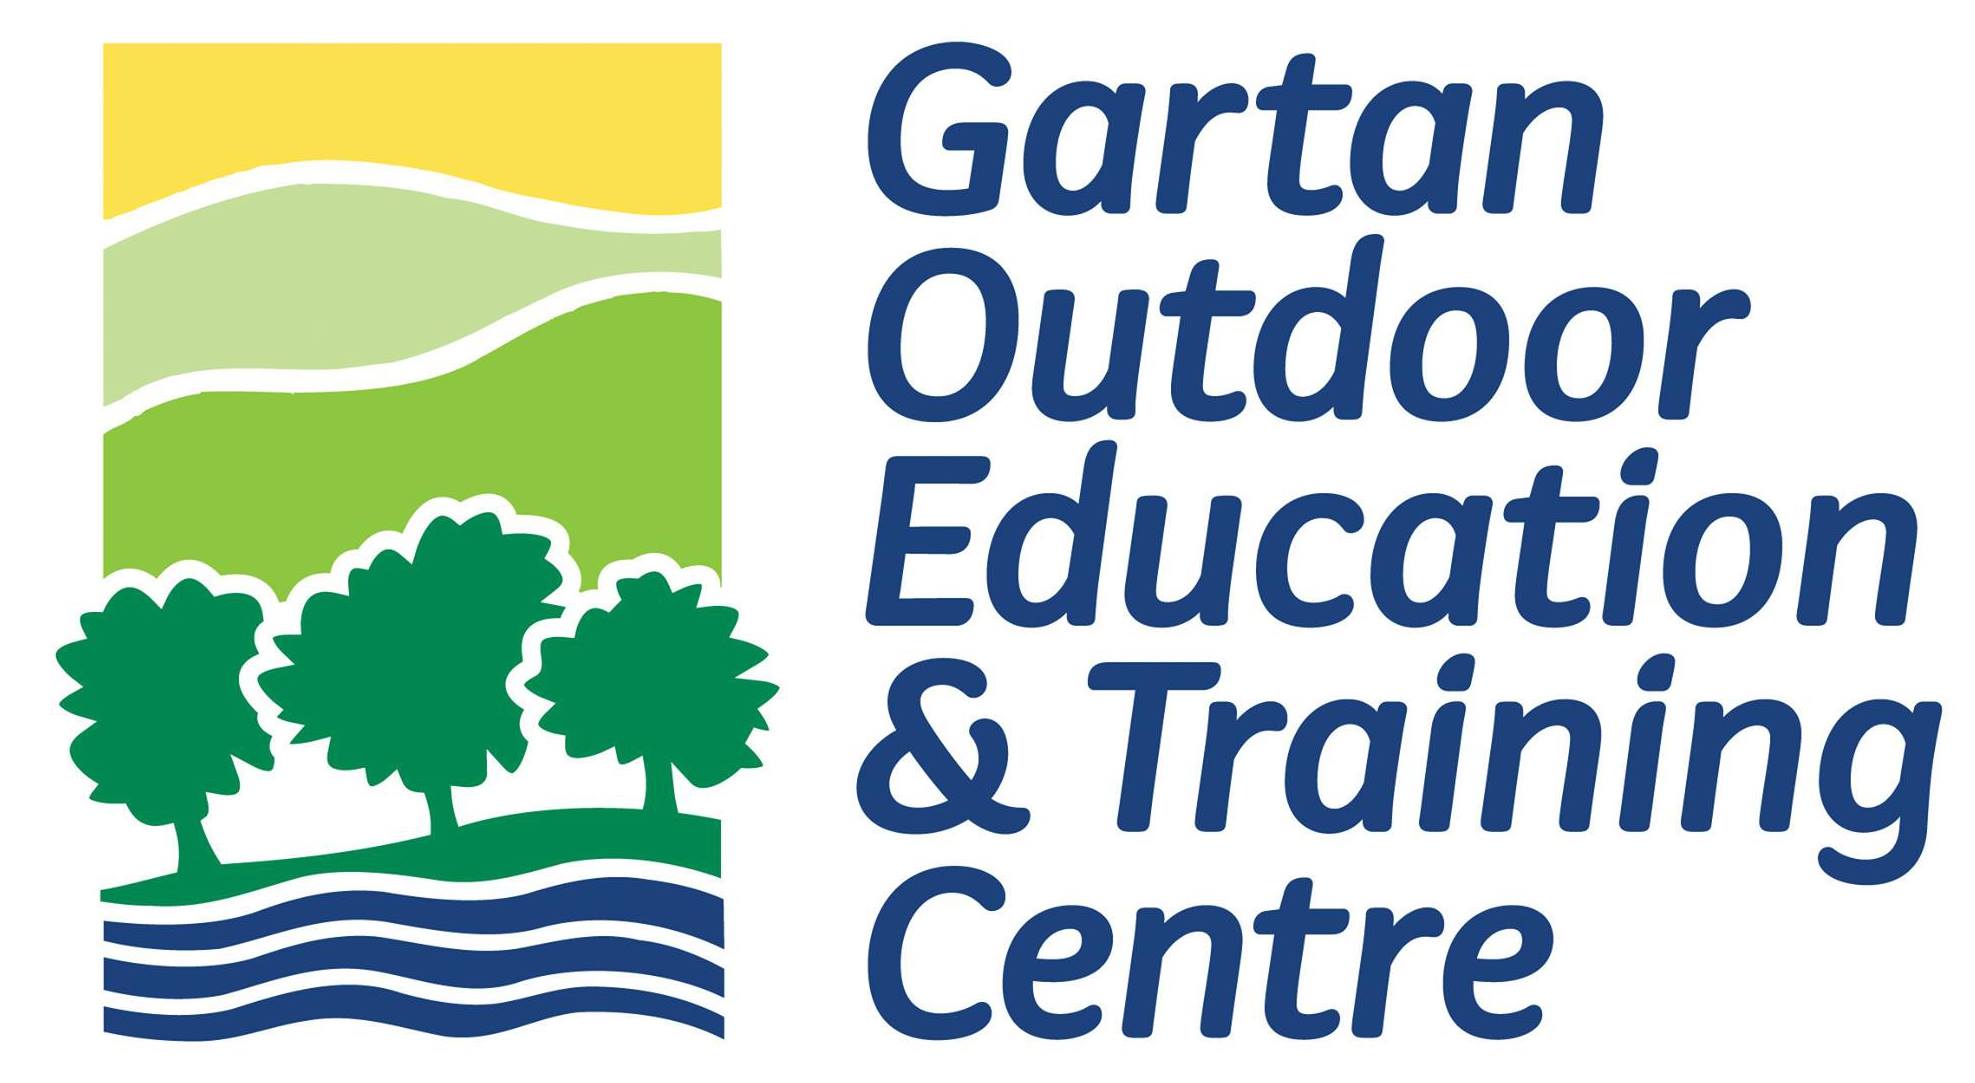 gartan outdoor education and training